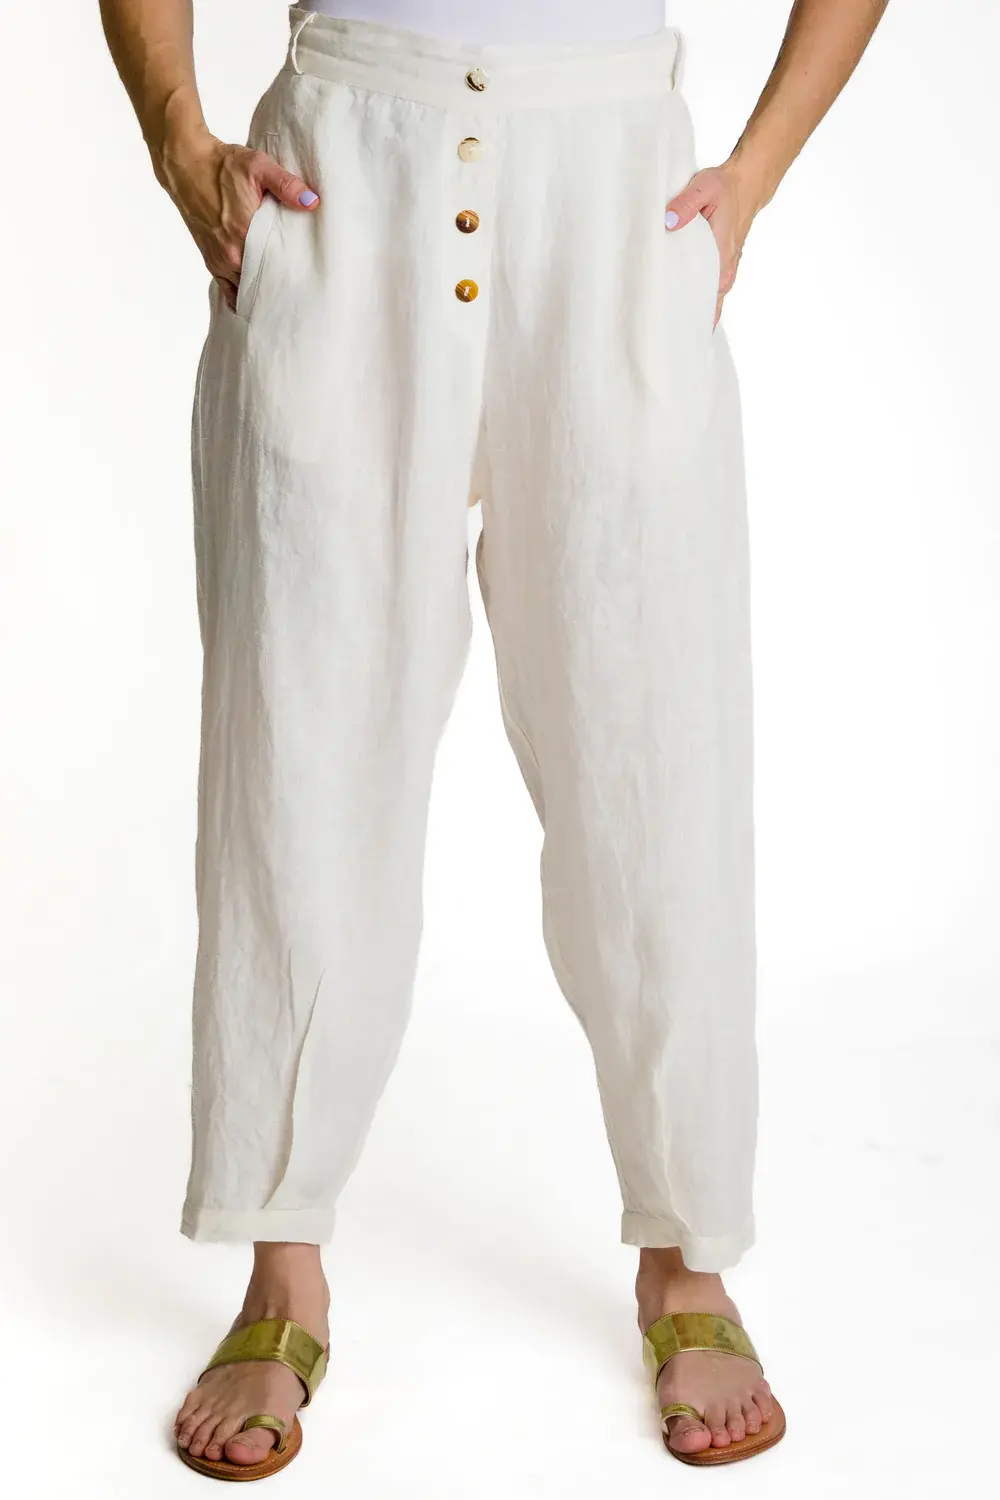 Imagine Fashion Limbani Pants in 2 colours